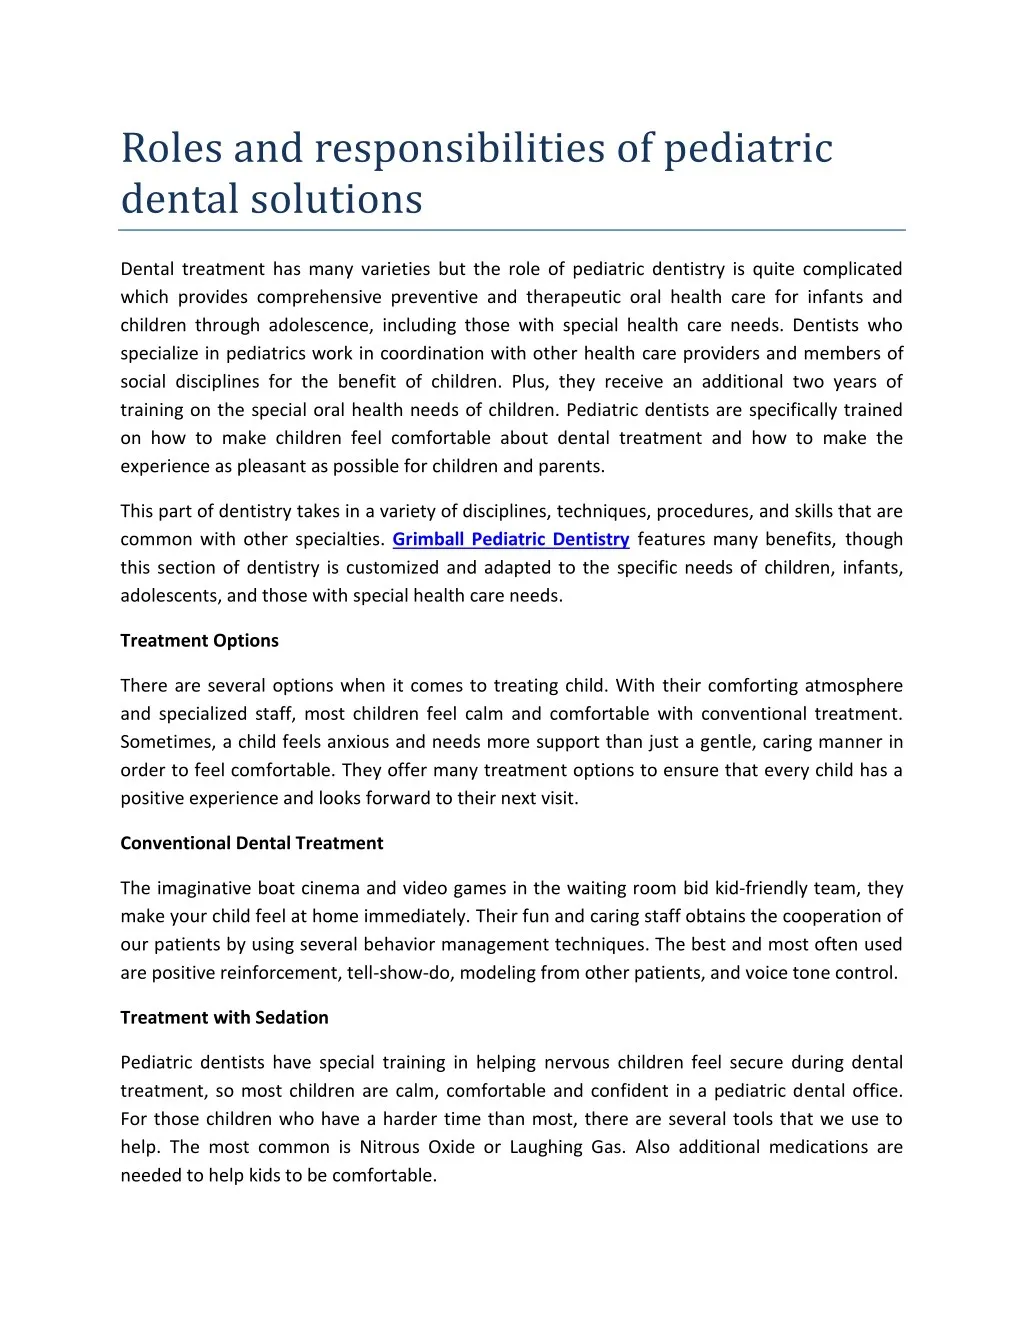 roles and responsibilities of pediatric dental